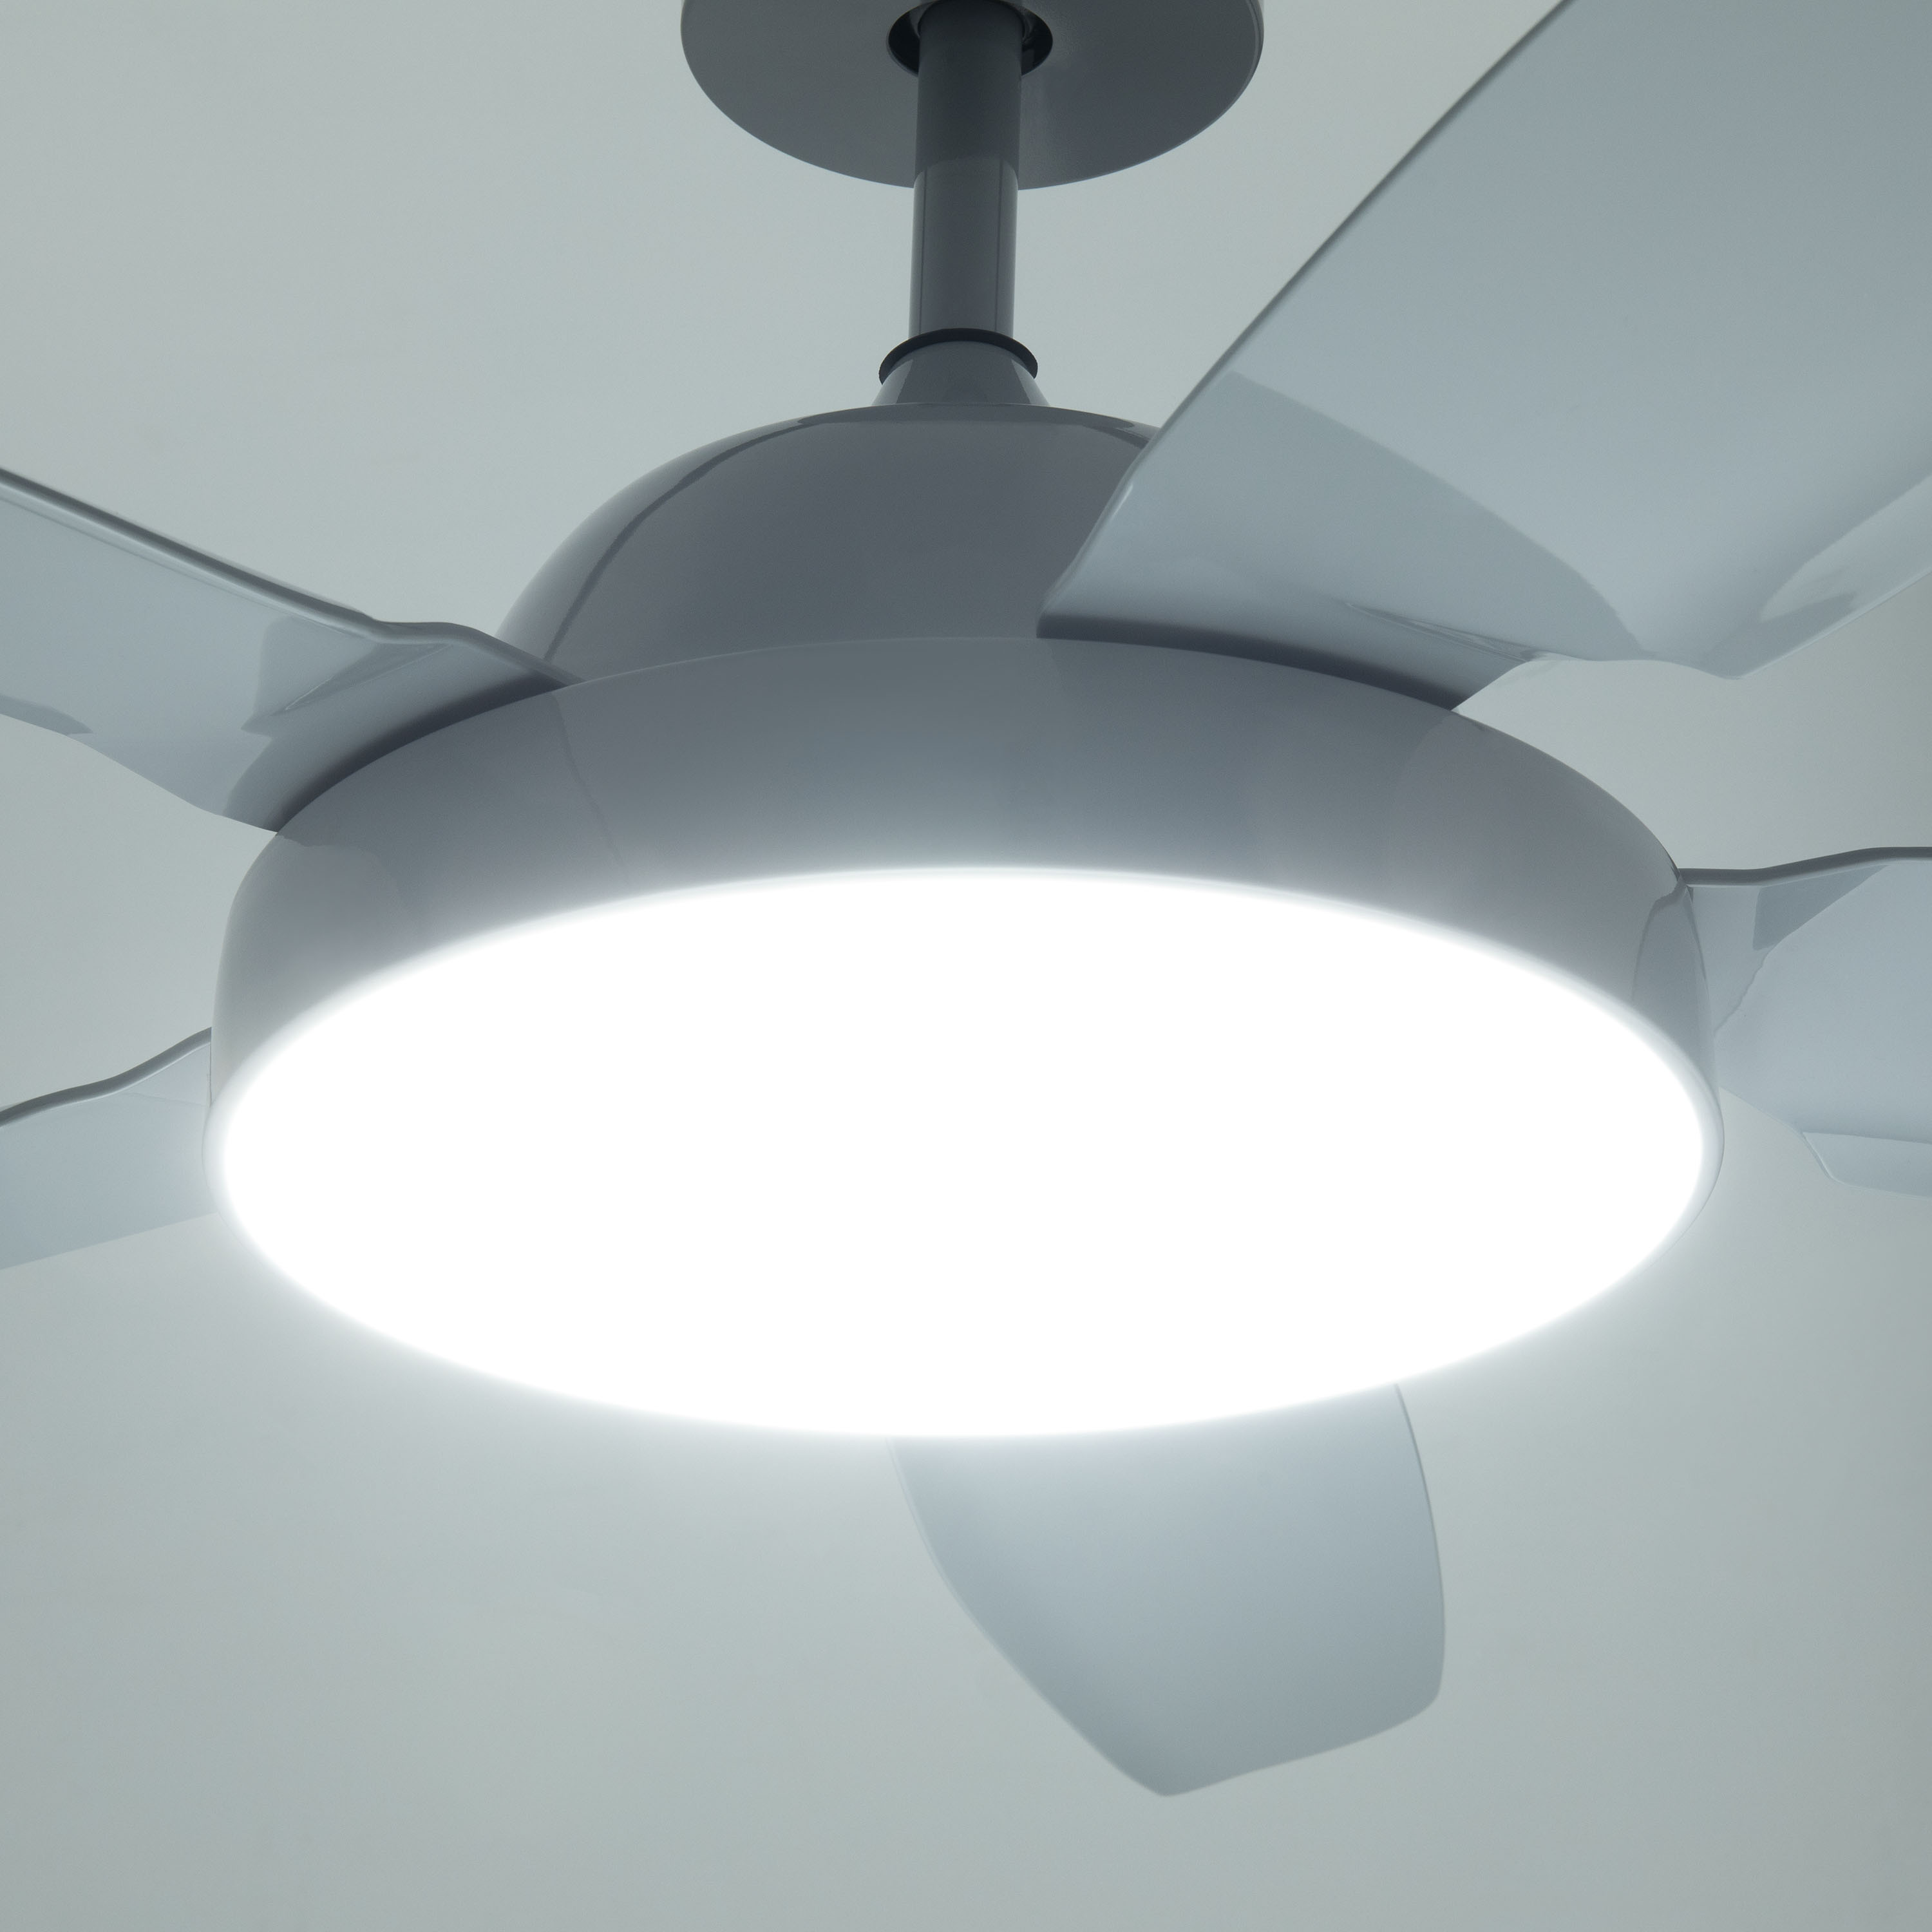 Flowind ventilatore da soffitto con luce 88w ikohs for Ventilatori da soffitto con luce e telecomando leroy merlin